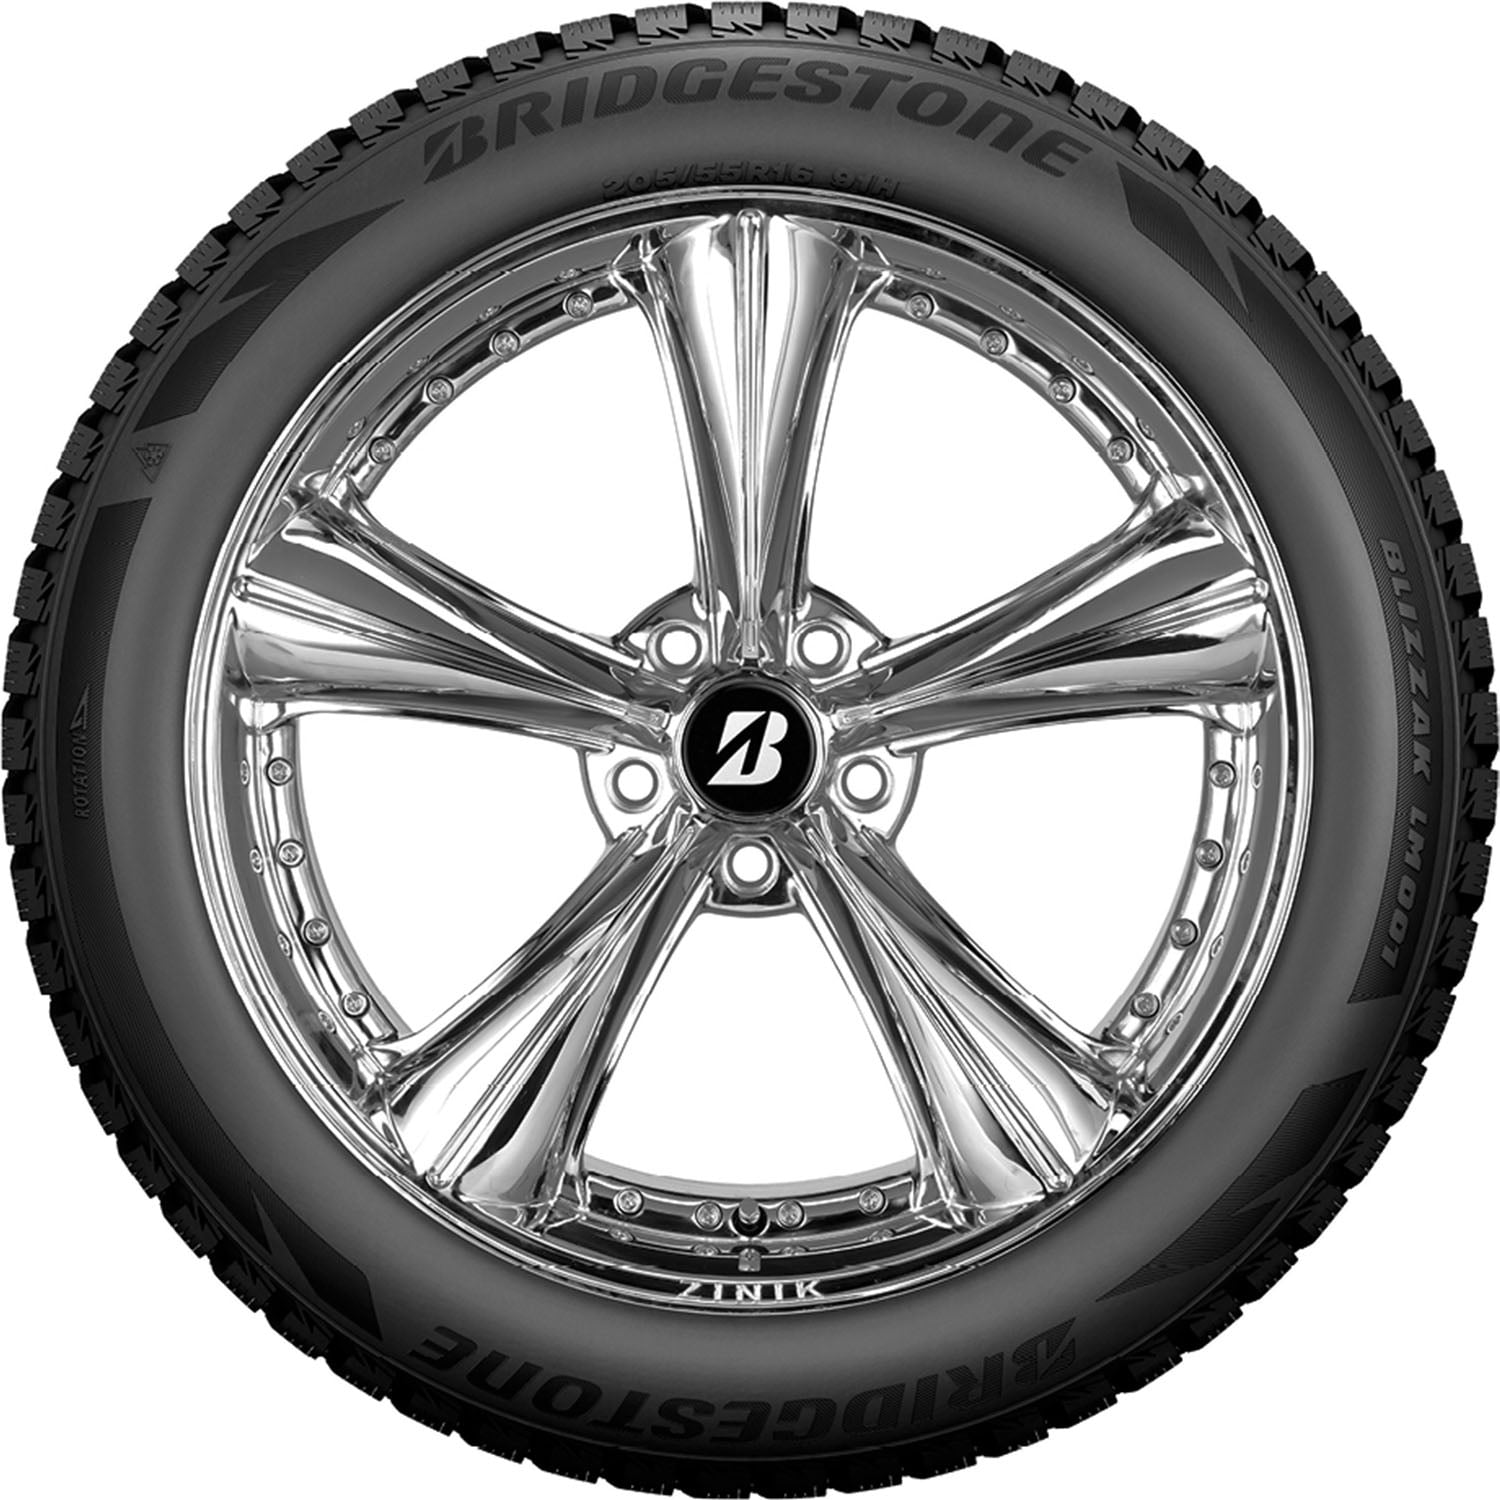 2022-23 Passenger Venue Volkswagen LM001 Trend Blizzak Winter Fits: Hyundai Execline, 205/55R17 Bridgestone Jetta Tire 2019-21 91H